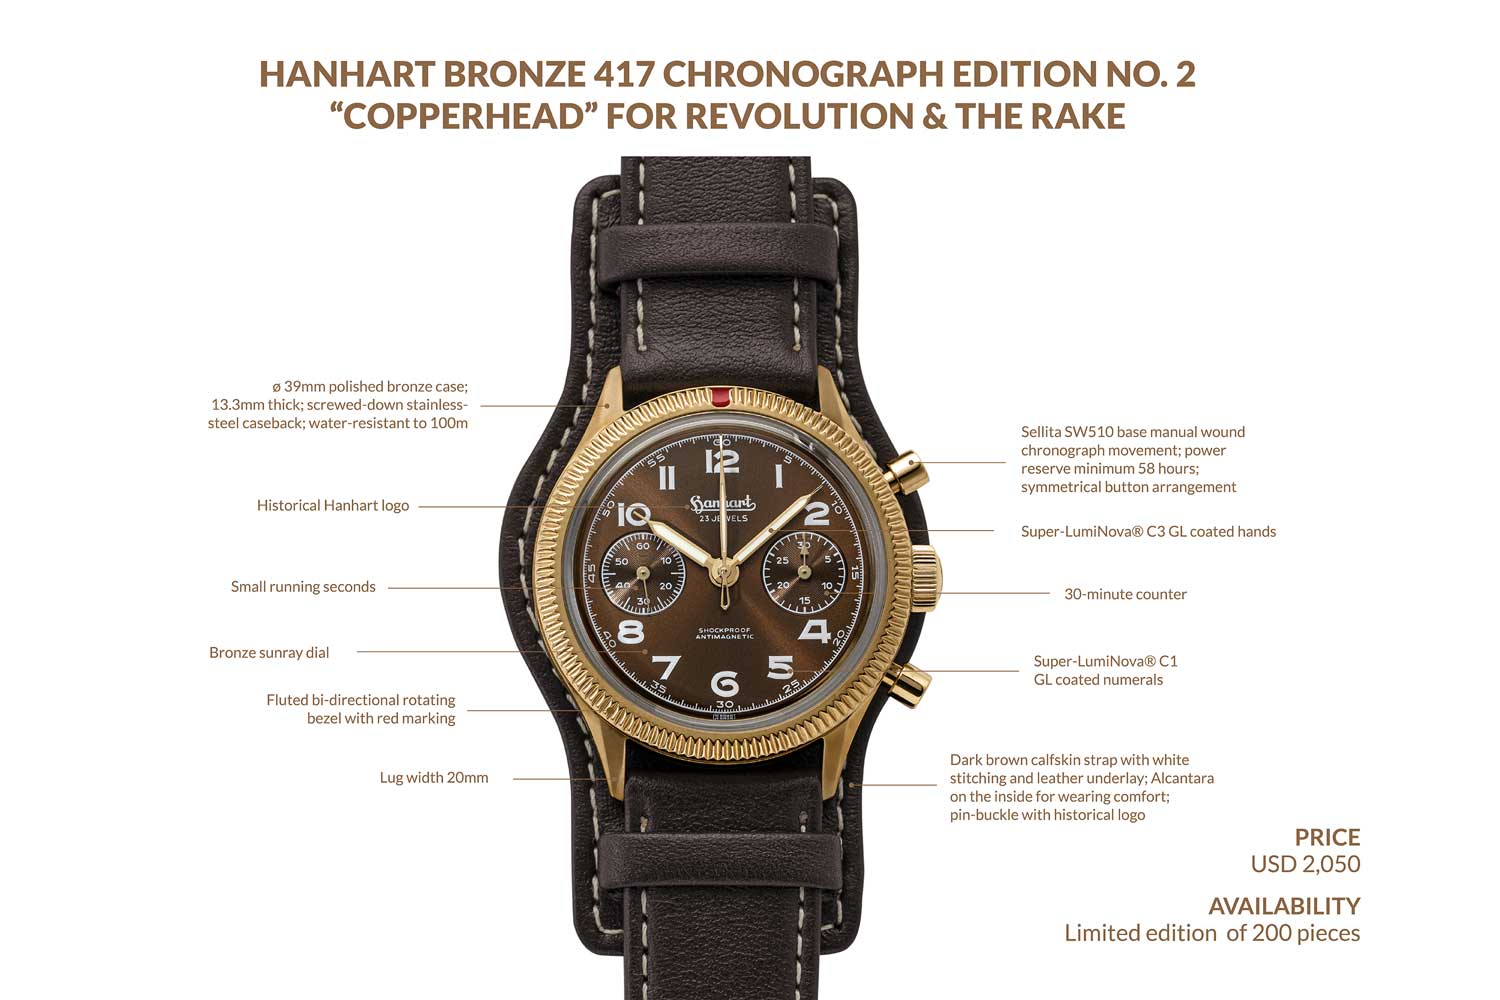 Hanhart Bronze 417 Chronograph Edition No. 2 "Copperhead" For Revolution & The Rake (Image: Revolution©)